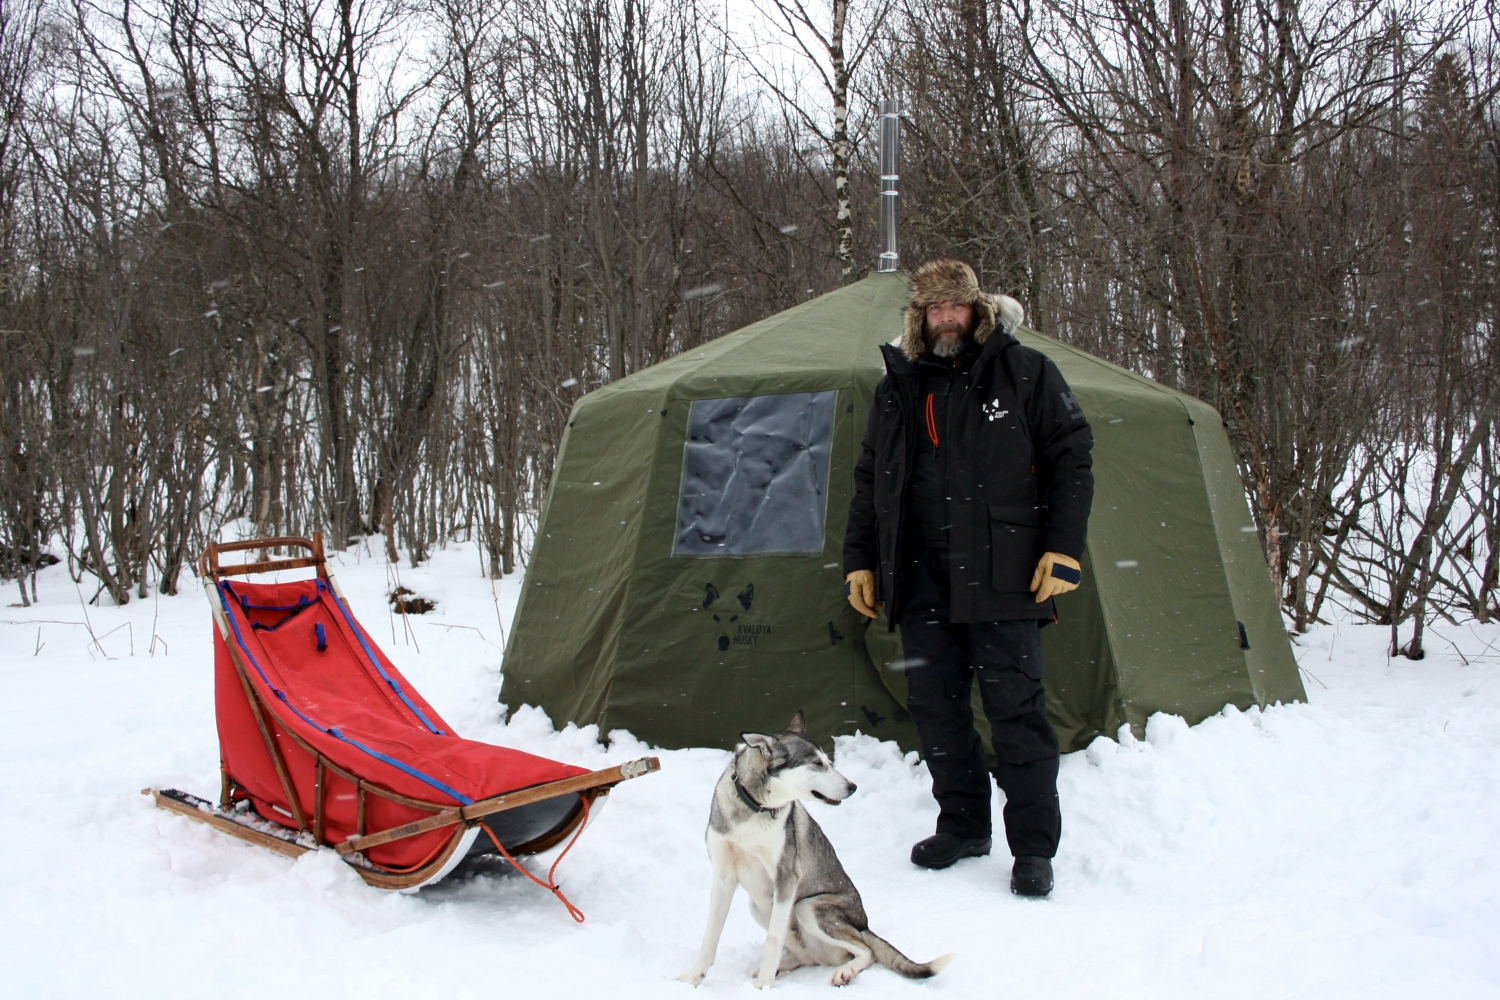 Tent, sled and husky